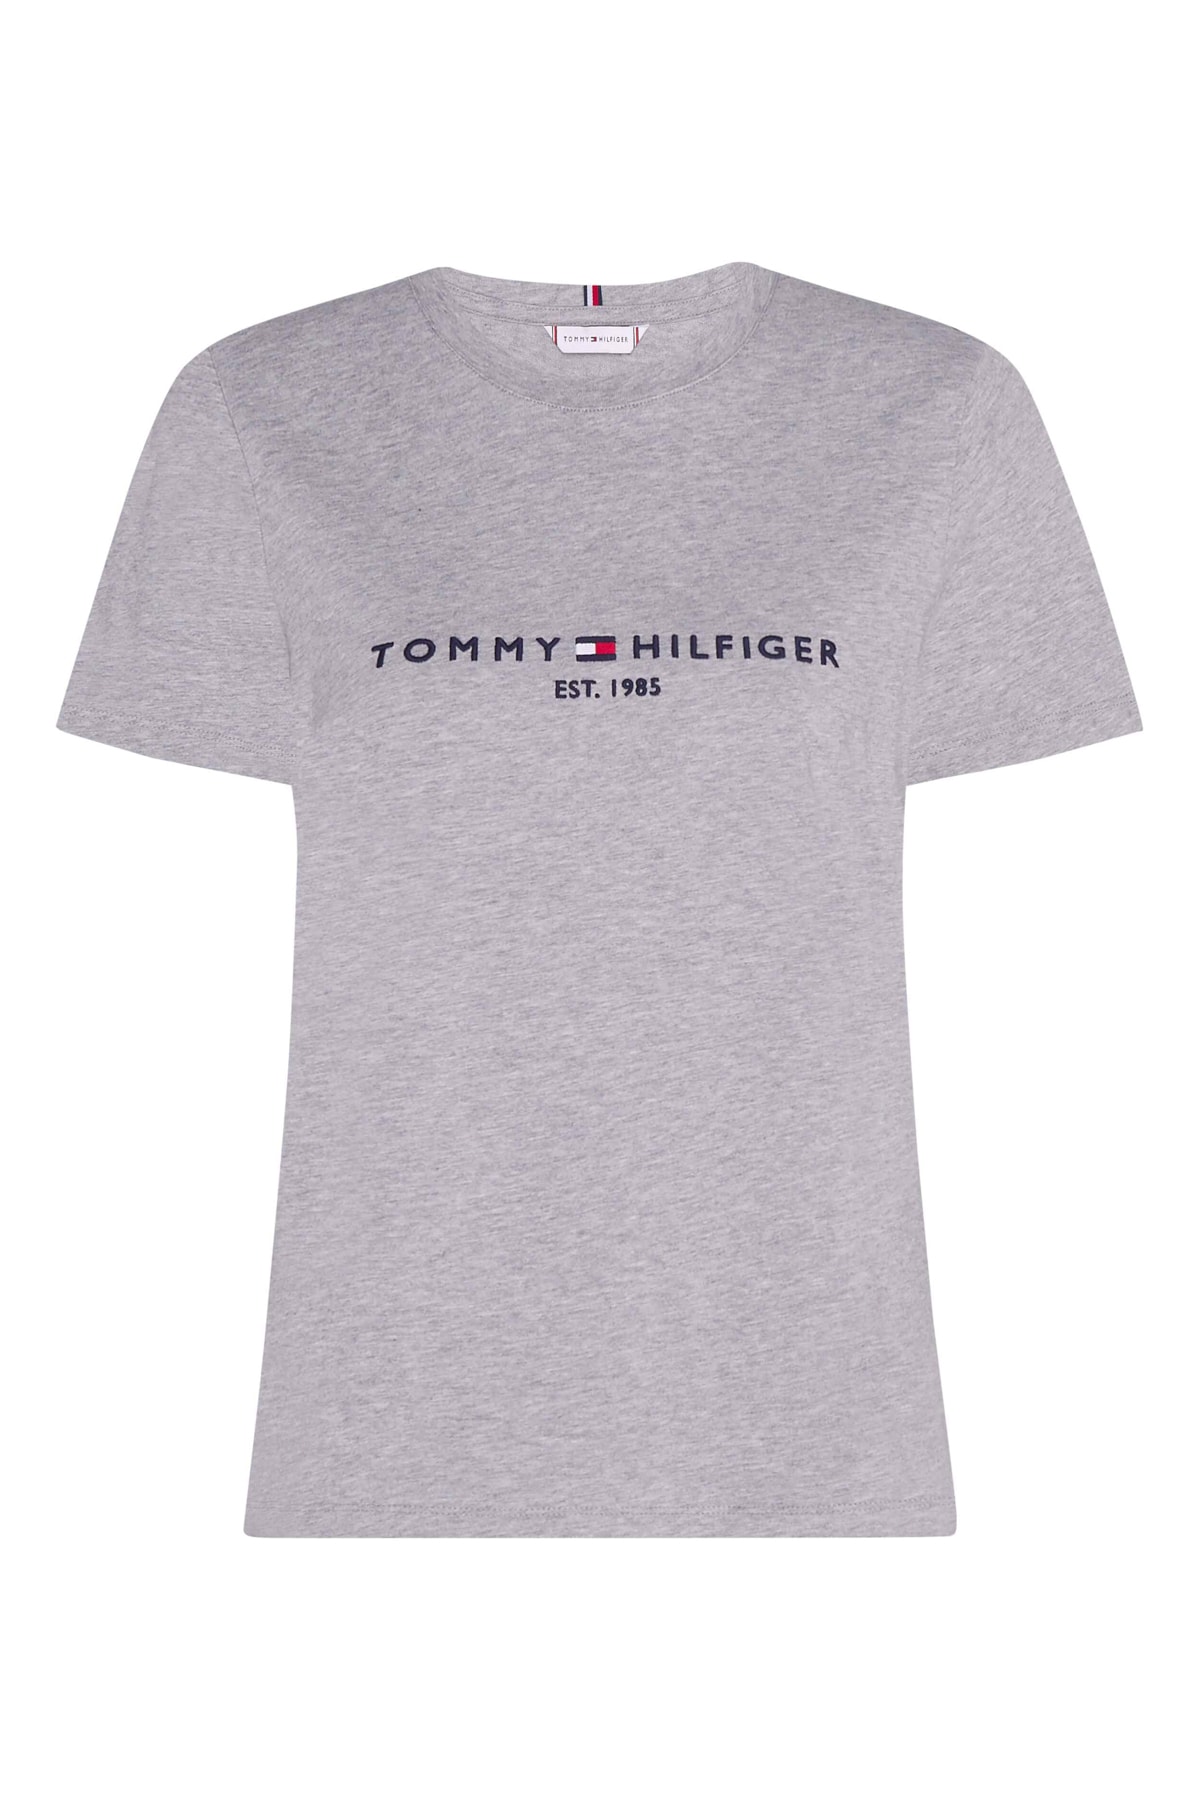 Tommy Hilfiger T-Shirt Grau Regular Fit